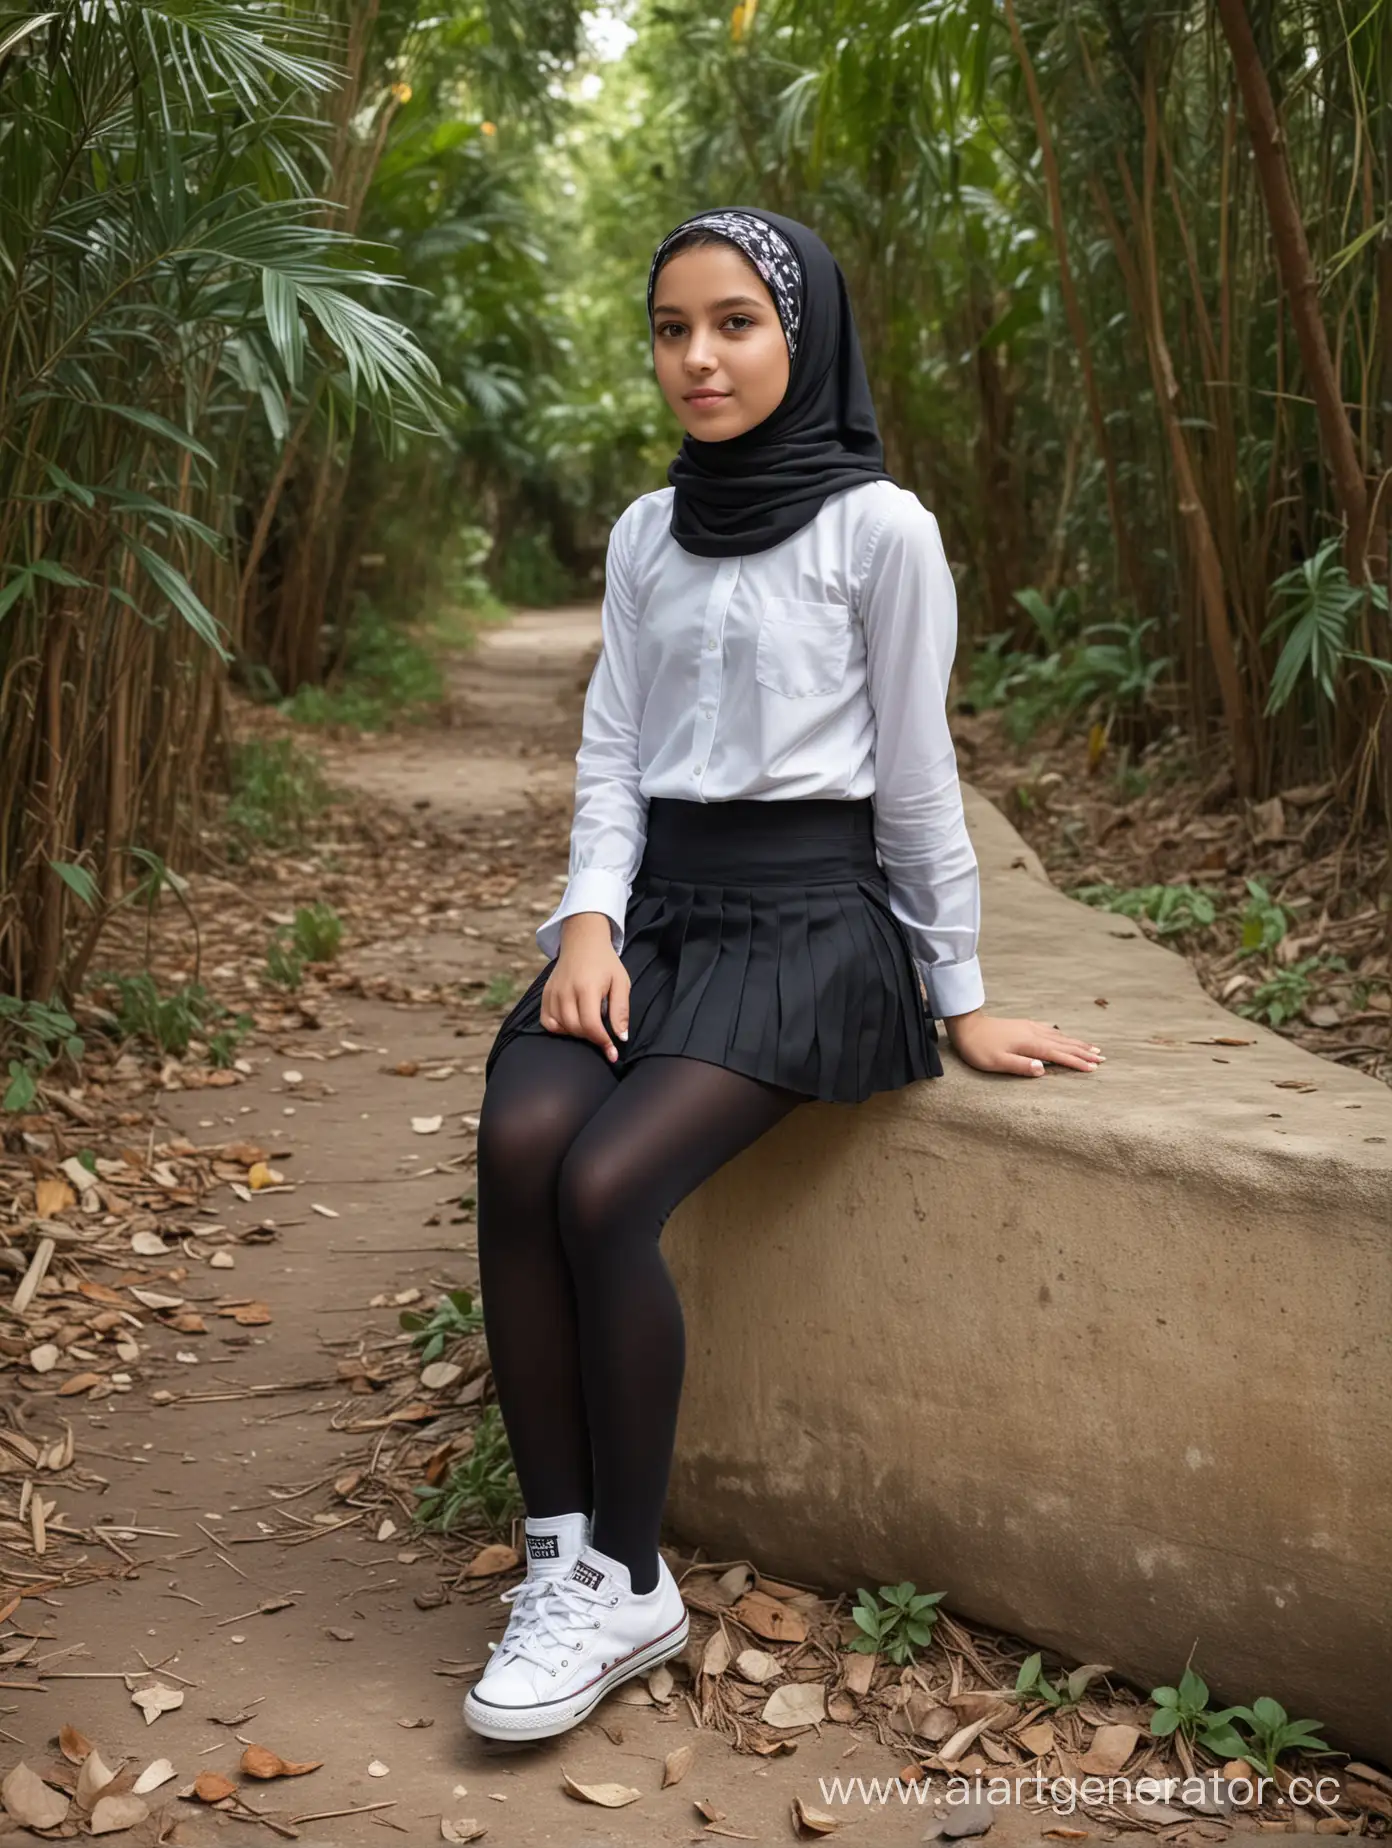 Turkish-Schoolgirl-in-Jungle-Setting-with-Hijab-and-School-Uniform